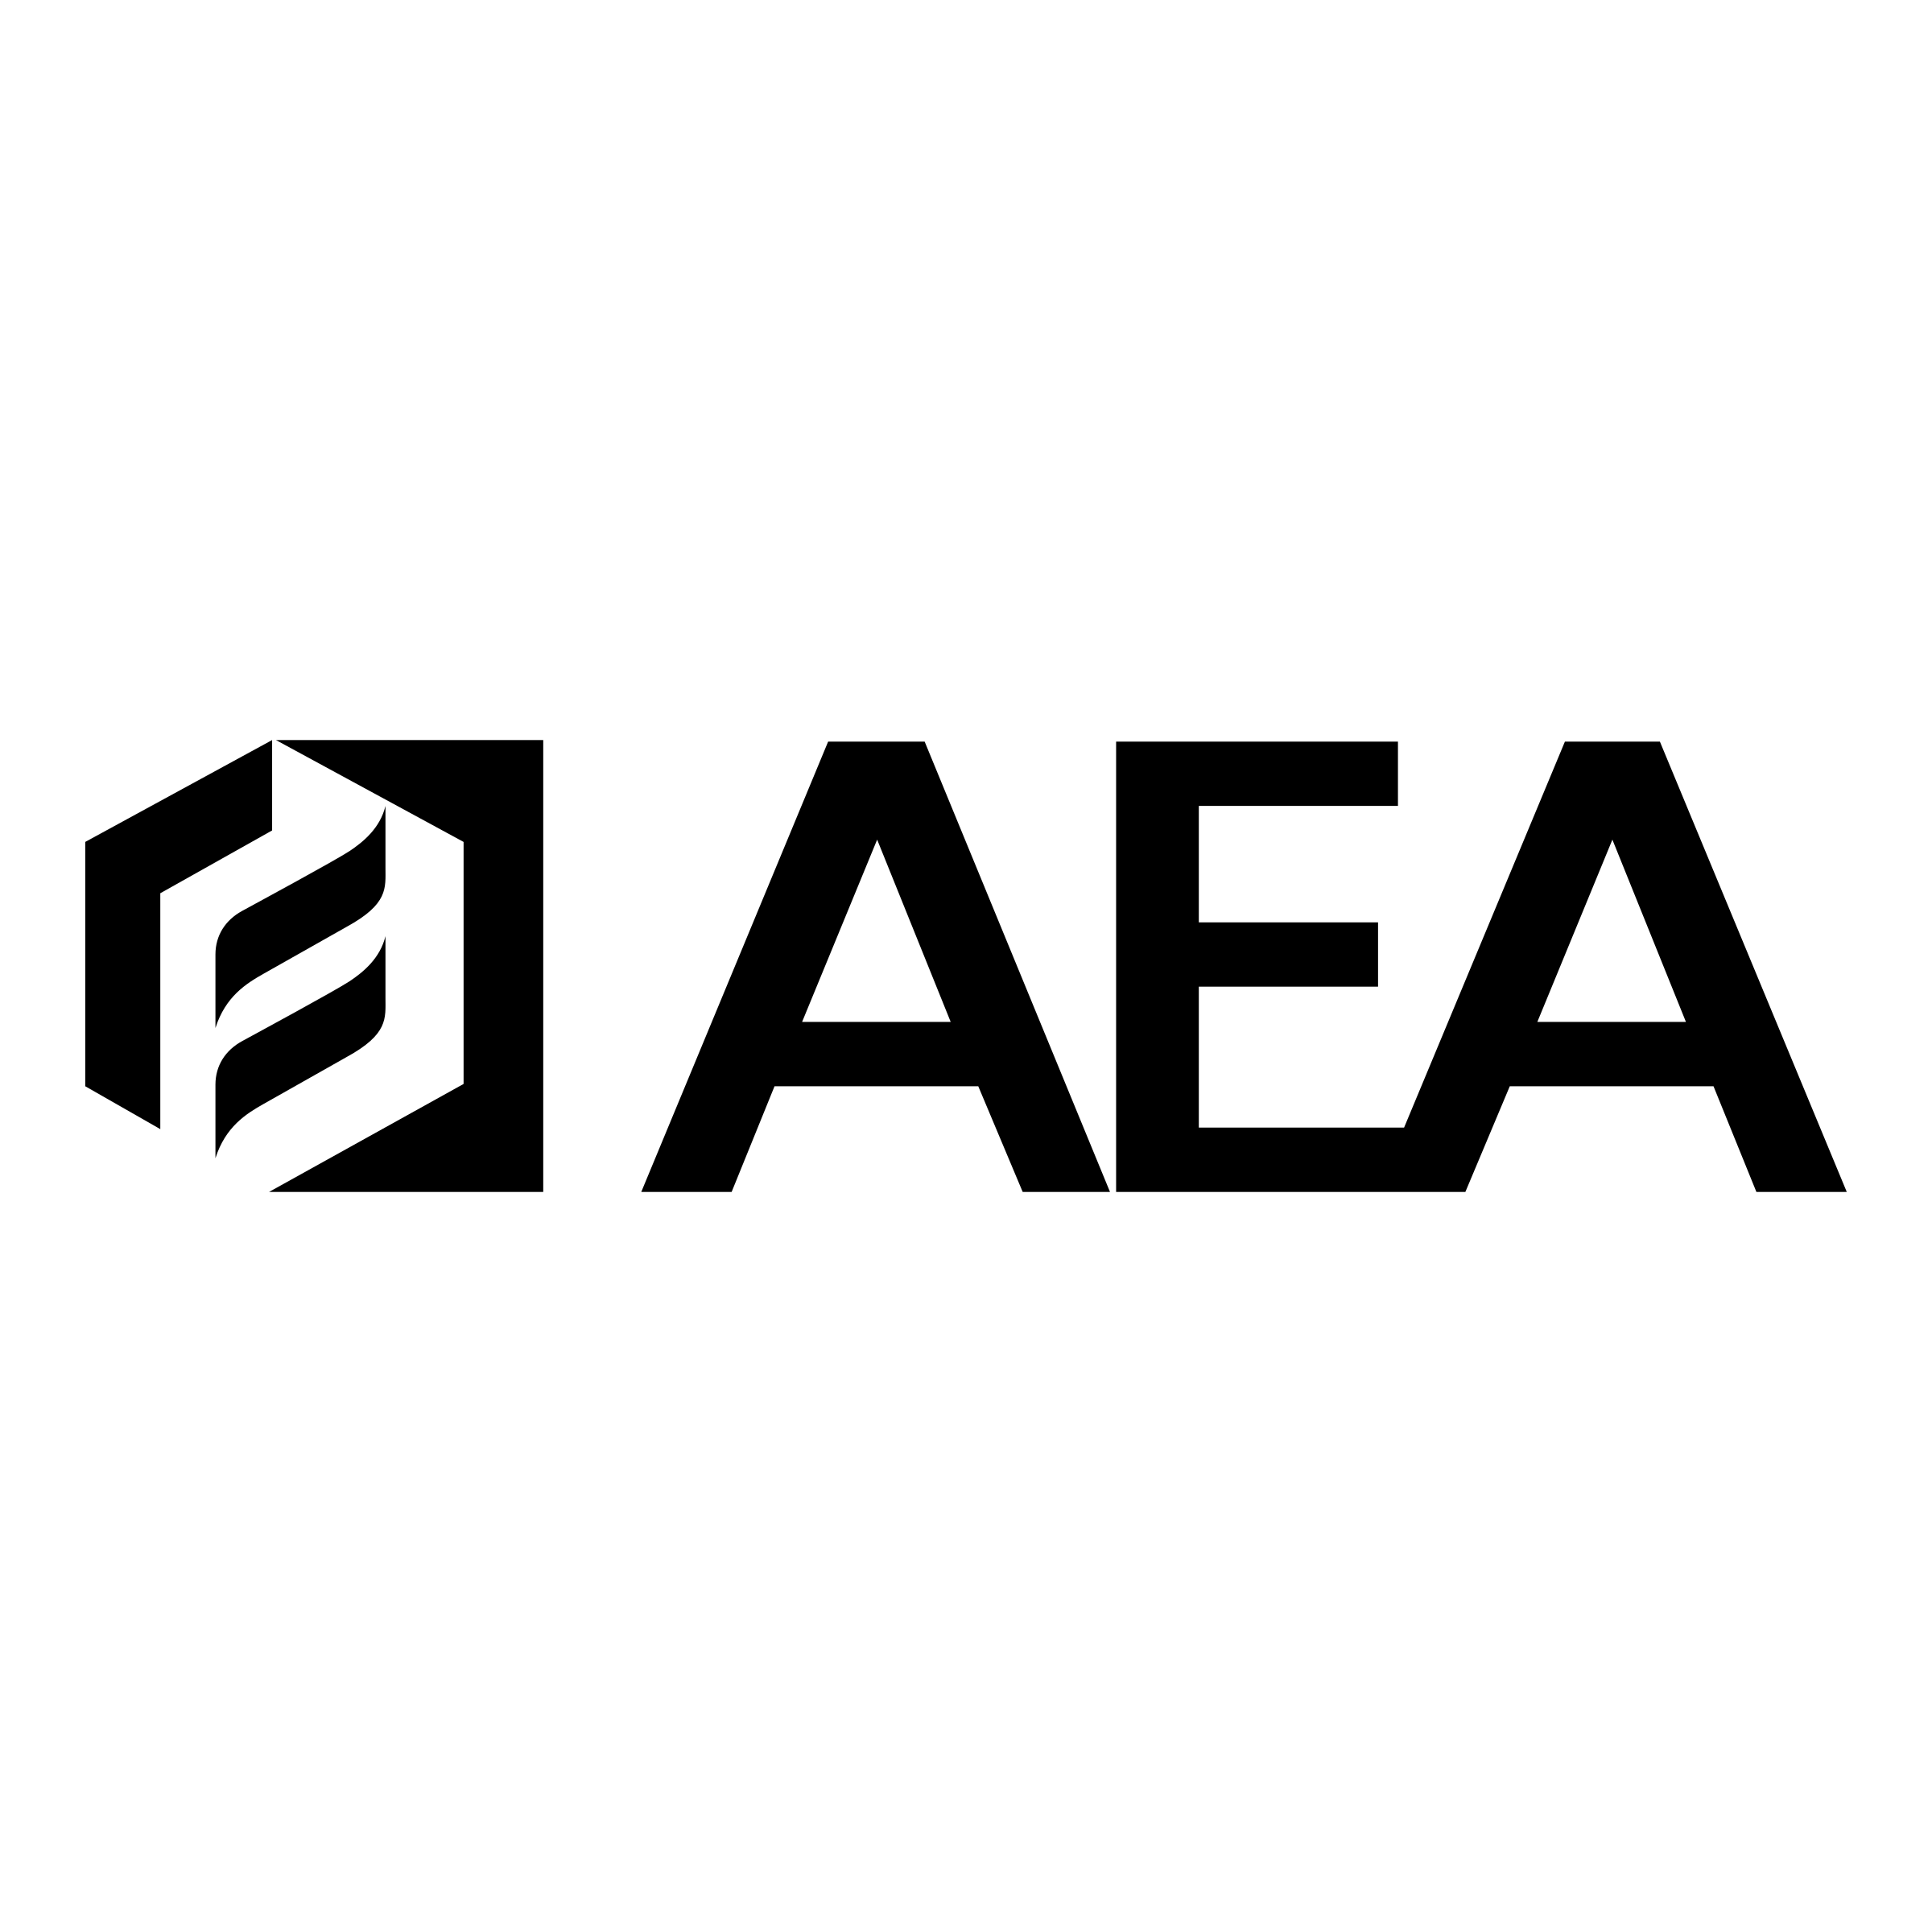 AEA Logo - AEA Logo PNG Transparent & SVG Vector - Freebie Supply